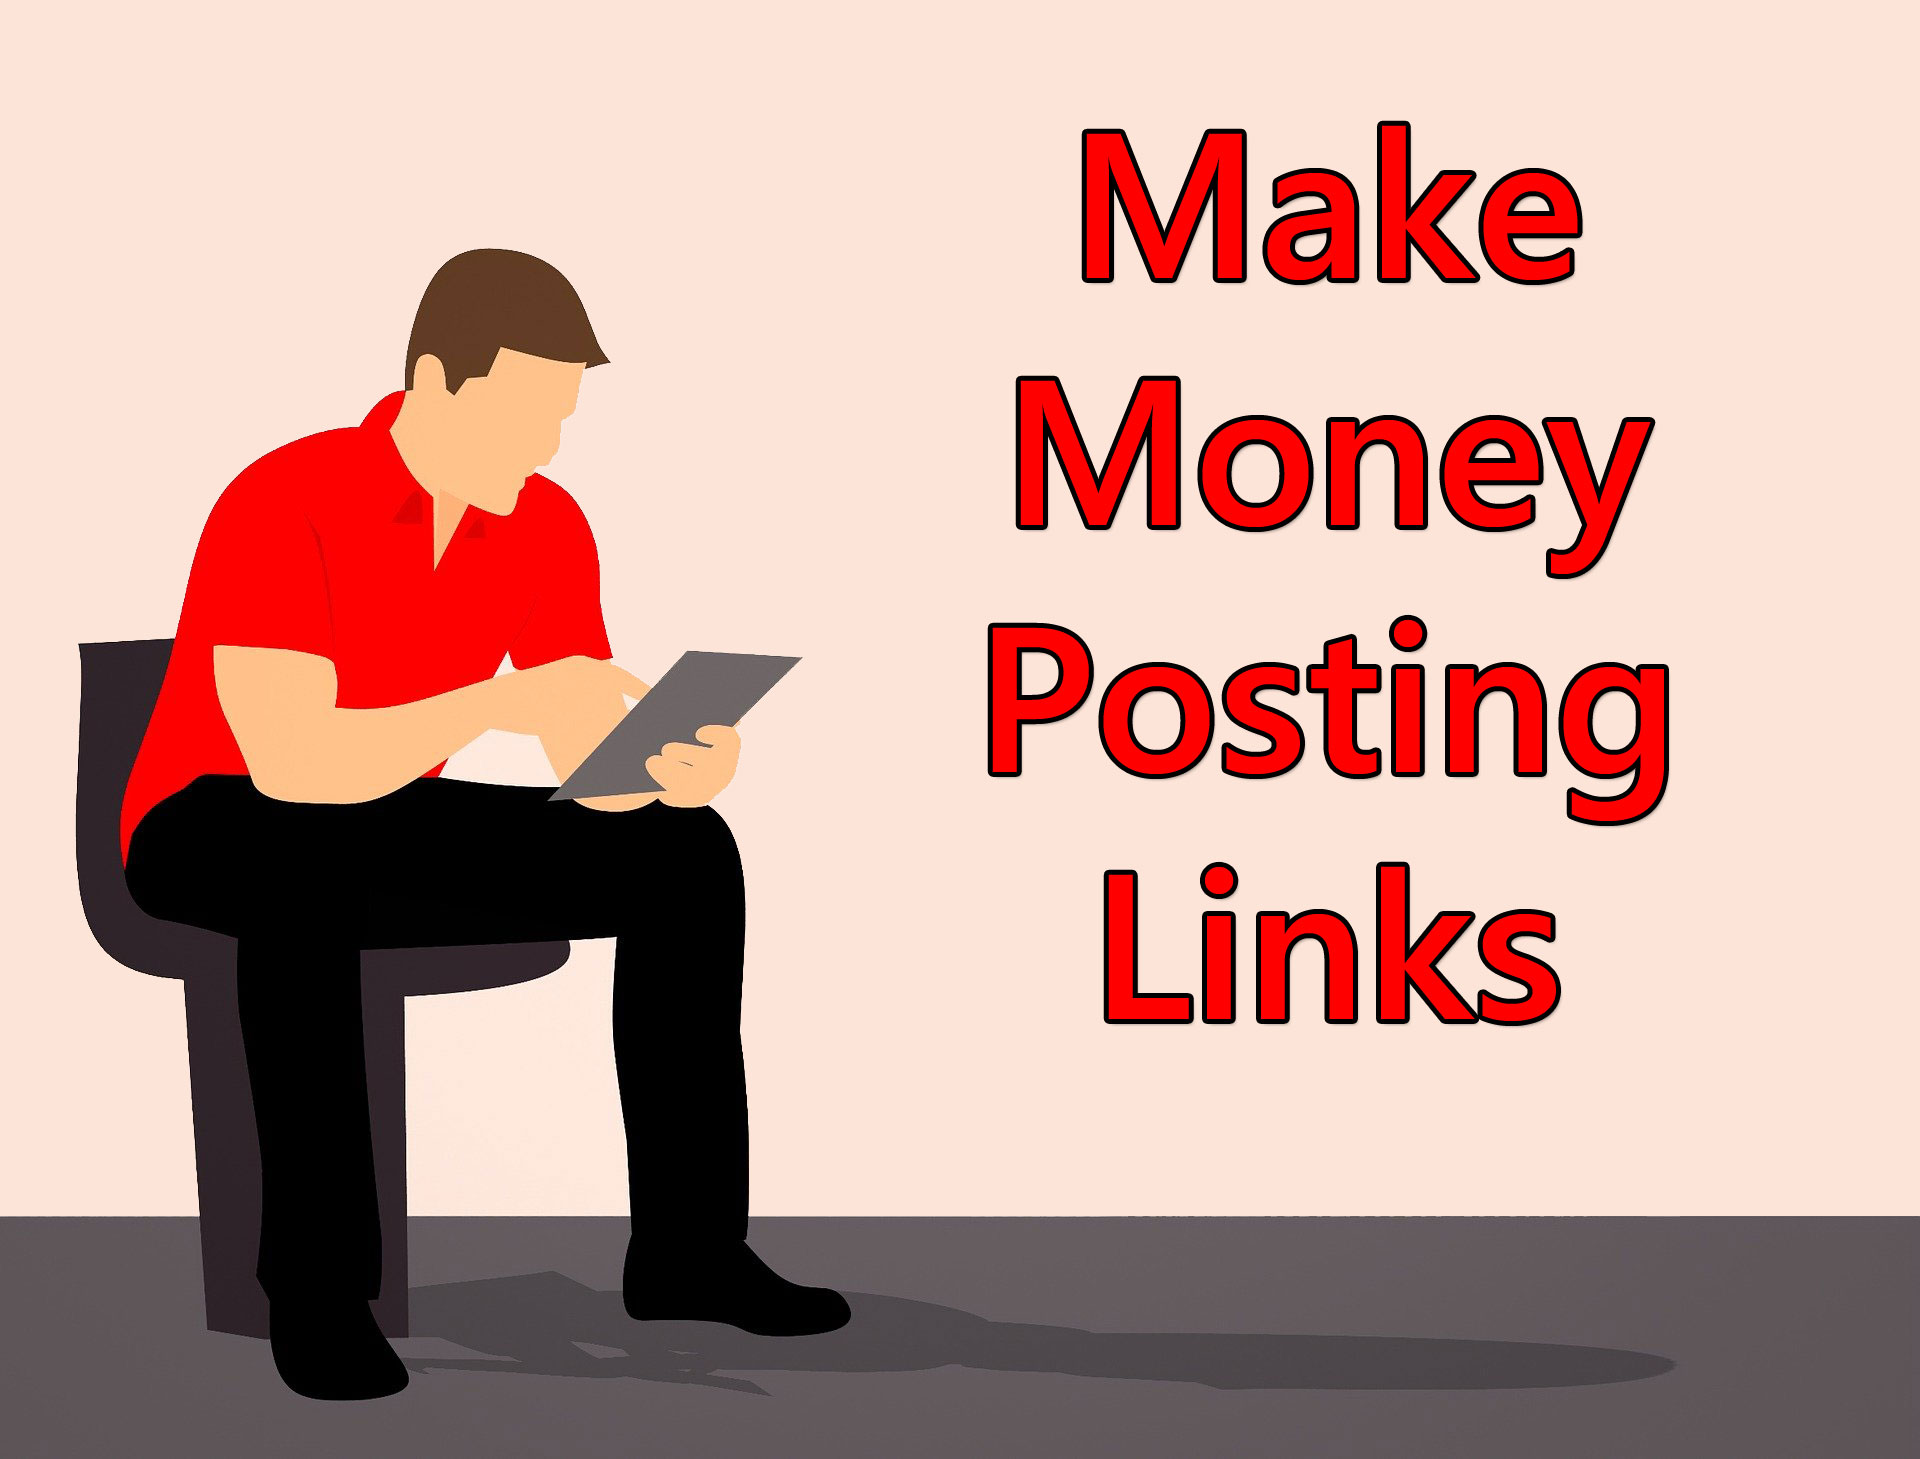 Make Money Posting Links For Companies Online